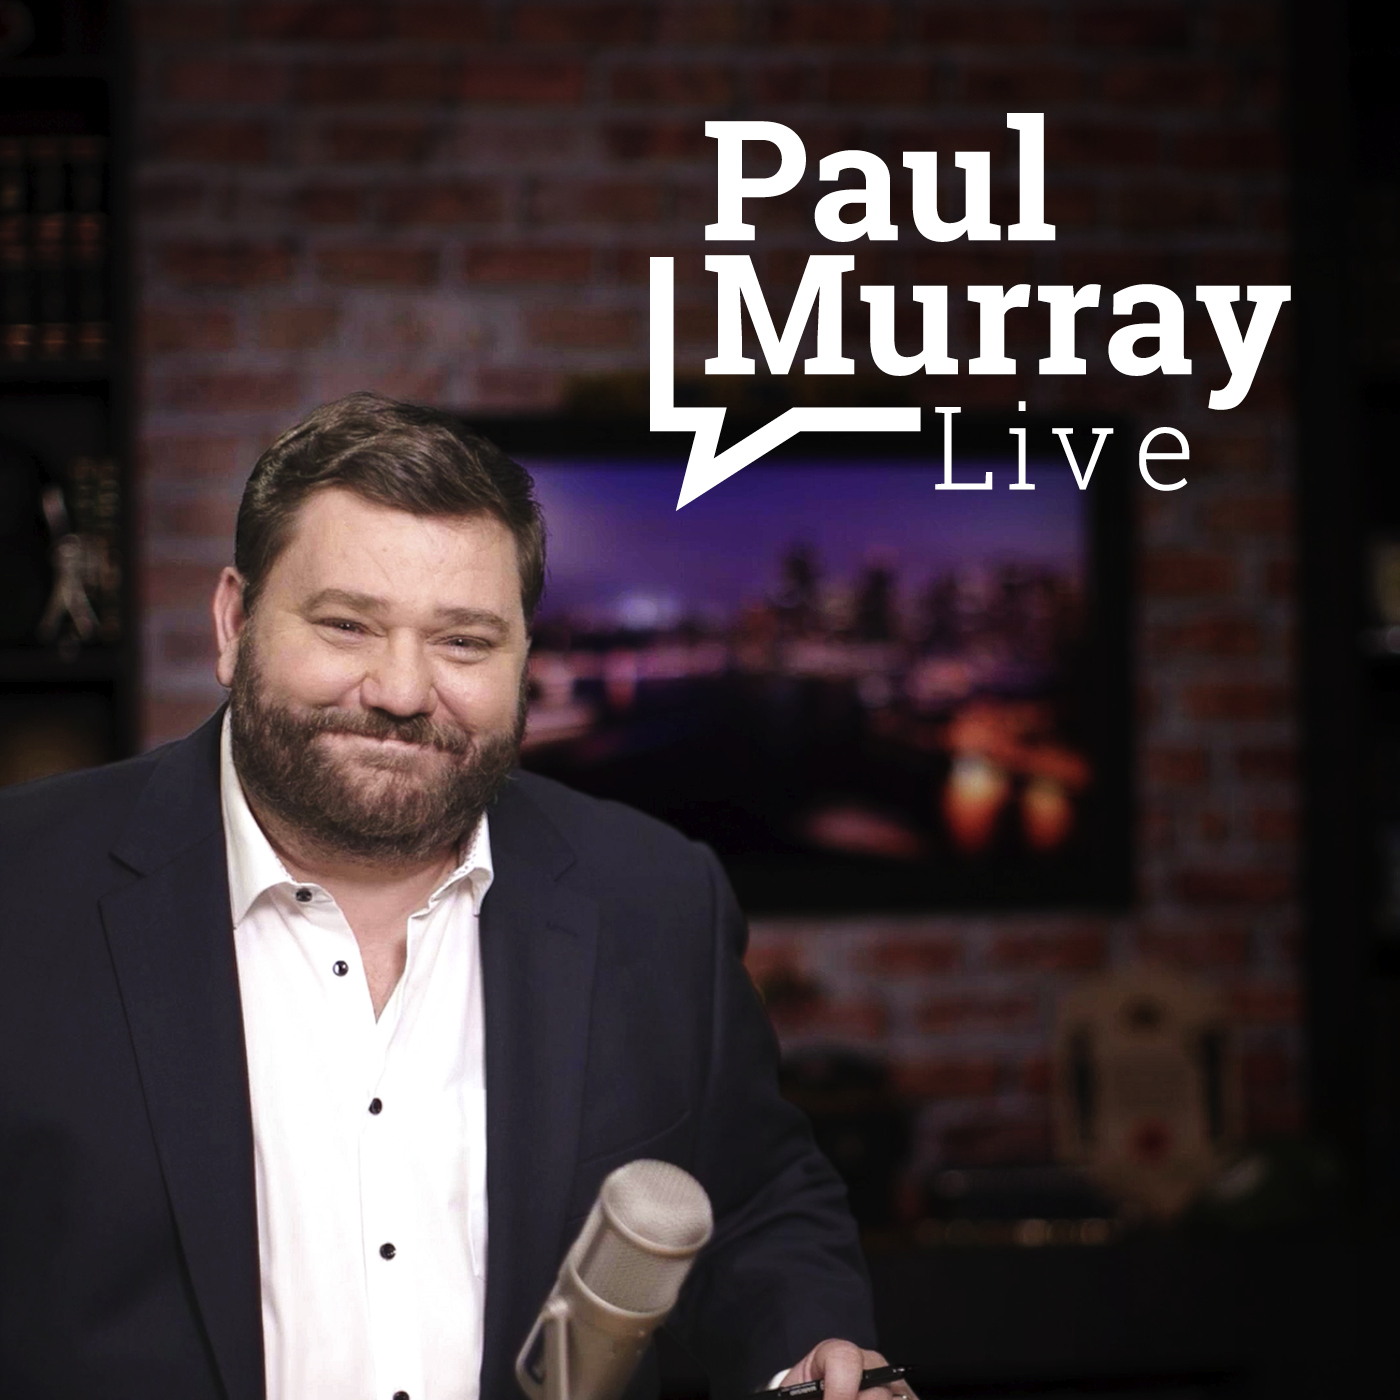 Paul Murray Live, Wednesday 24th November